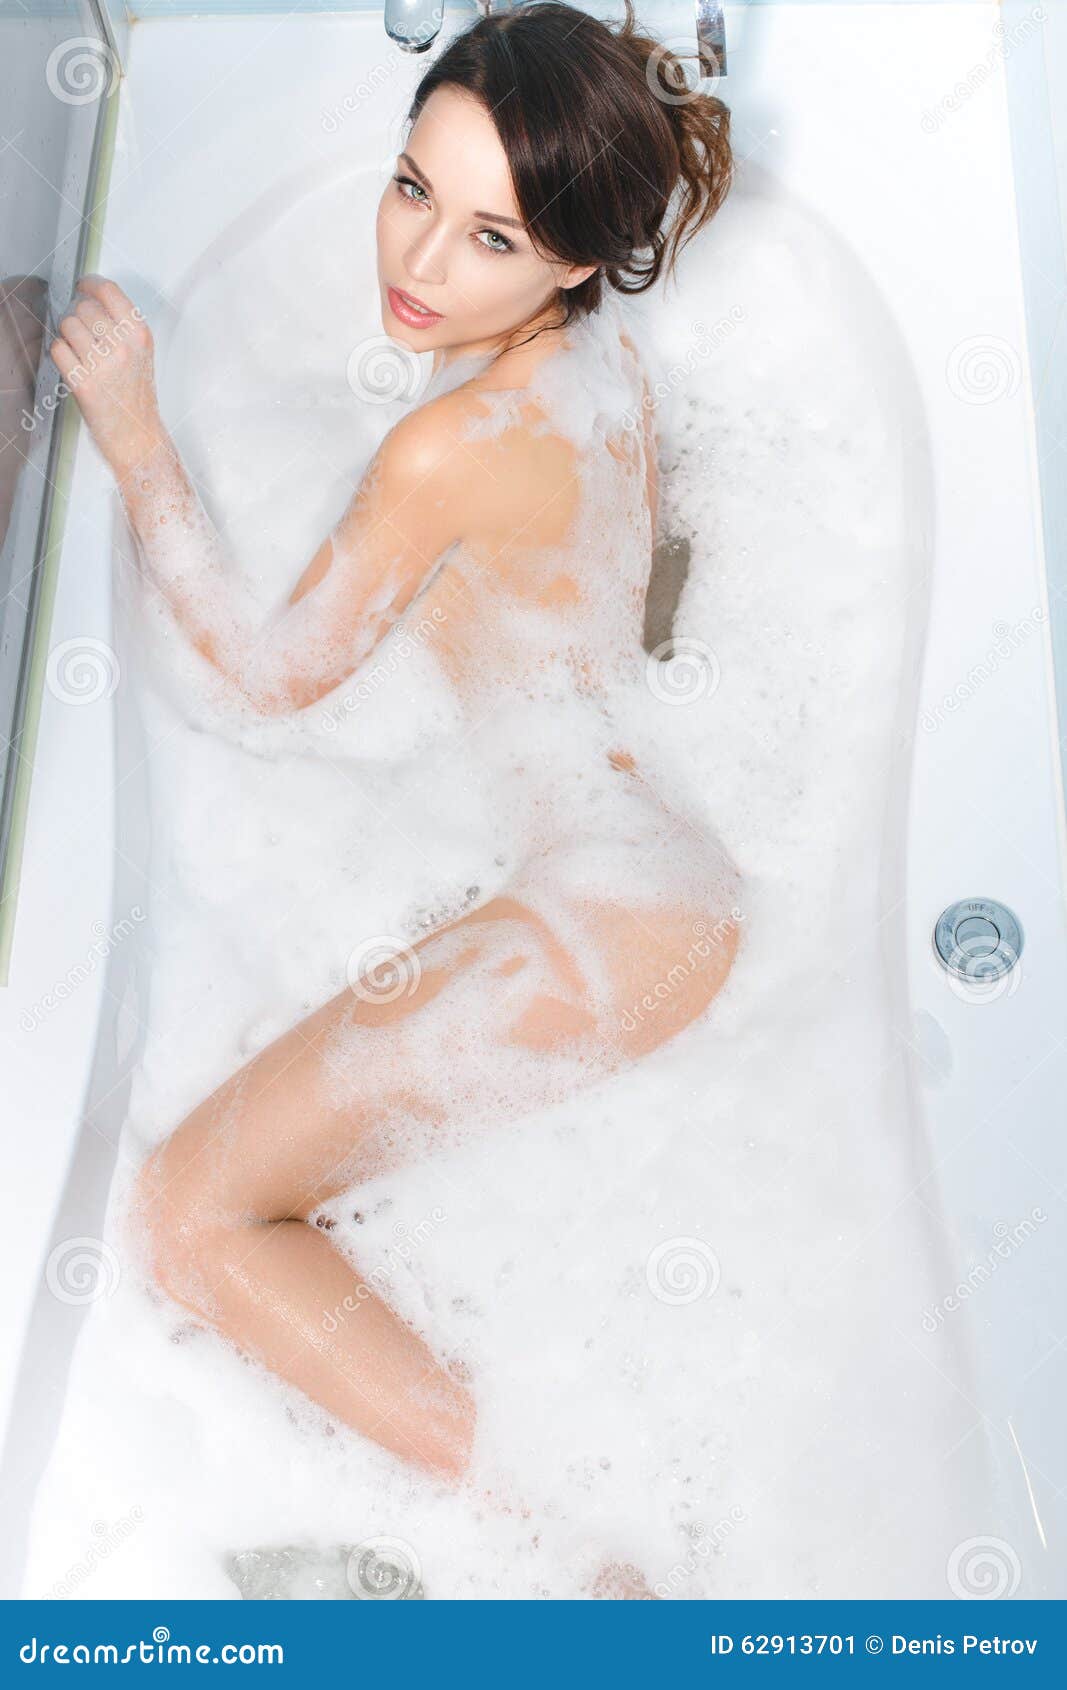 Best of Girl in bath nude